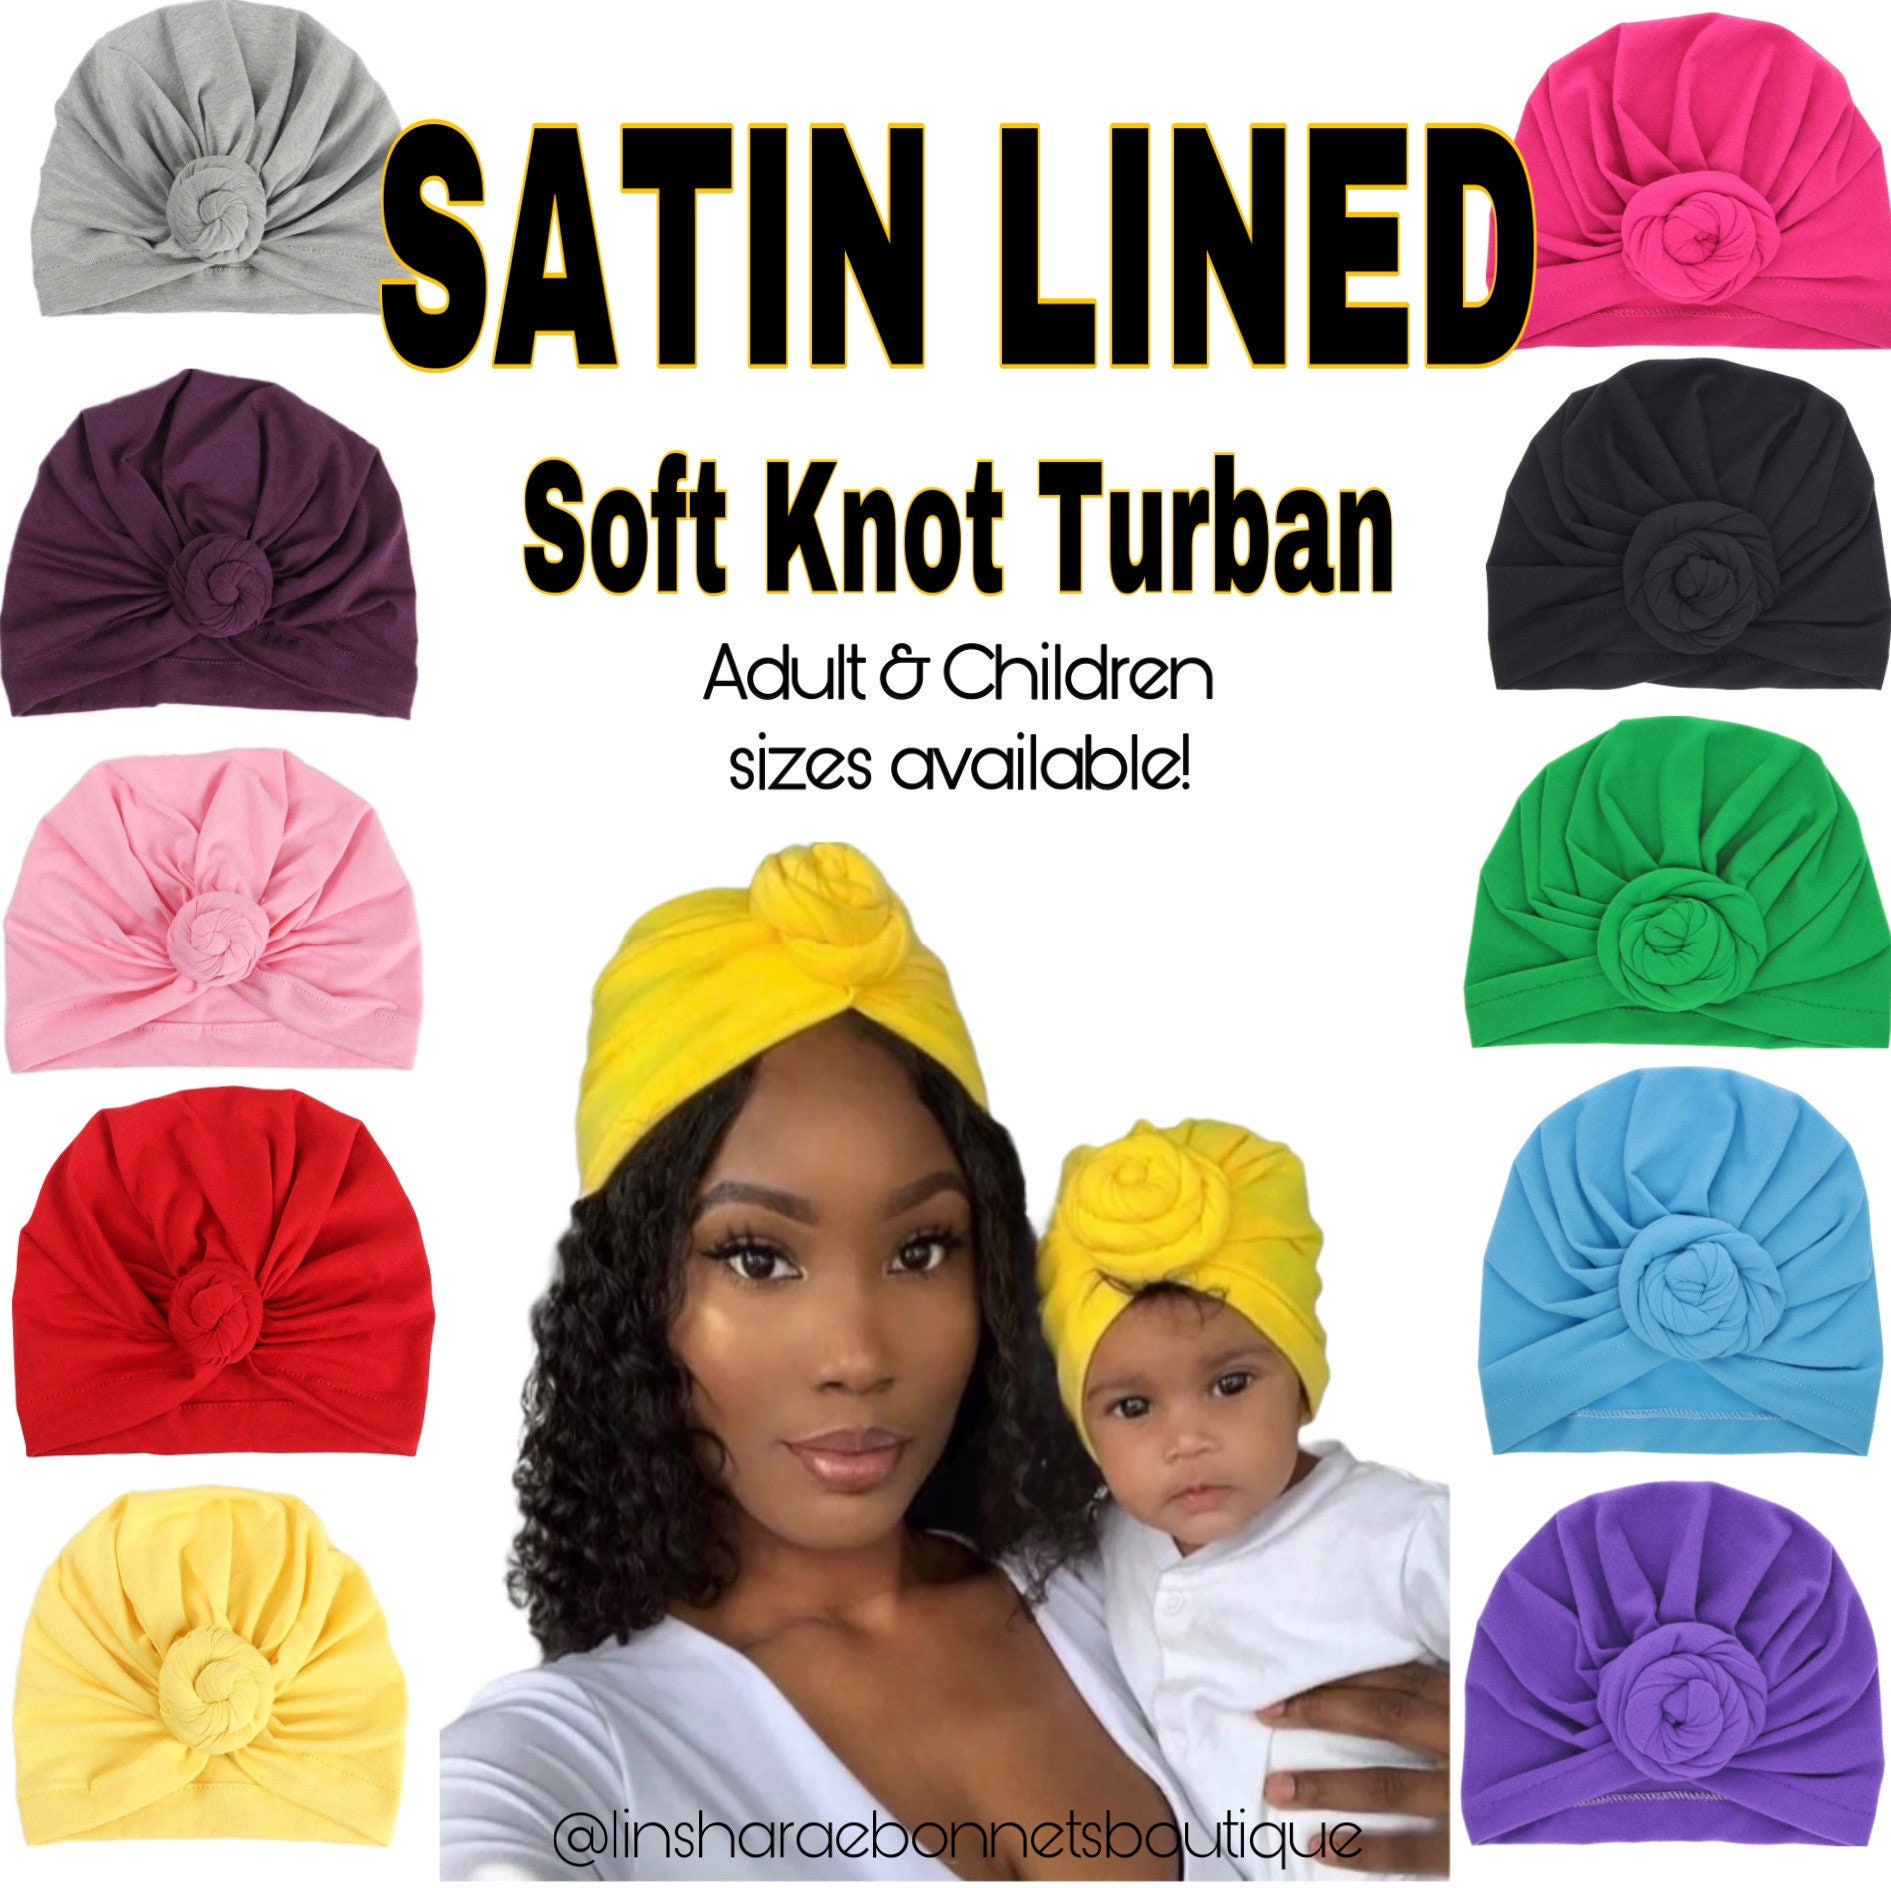 Baby Infant Hat Floral Print Turban Cap Newborn Head Wrap Beanie Knot Headband